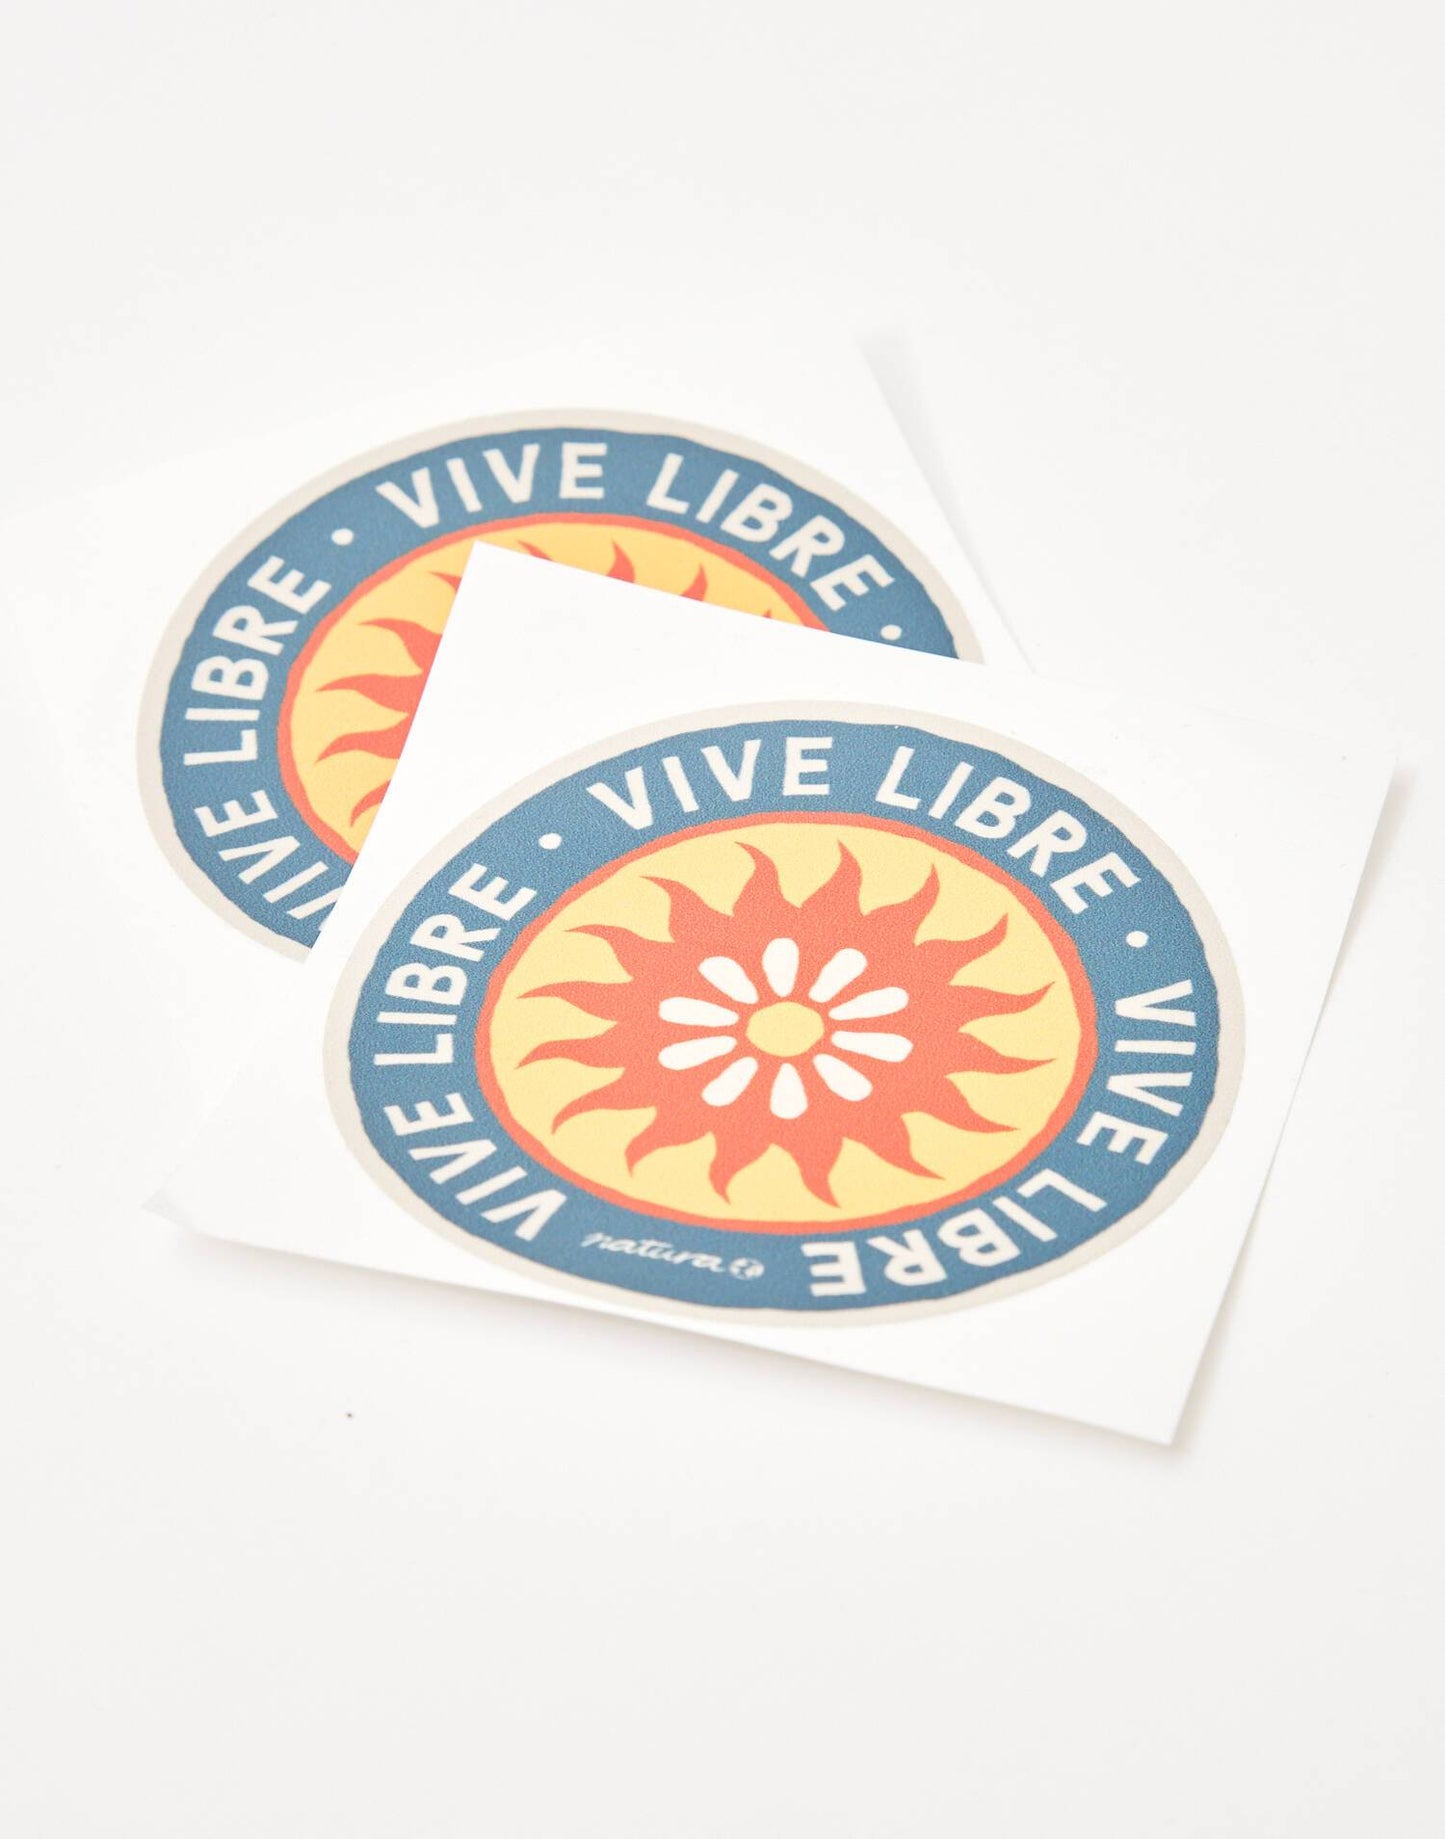 Vive Libre sticker